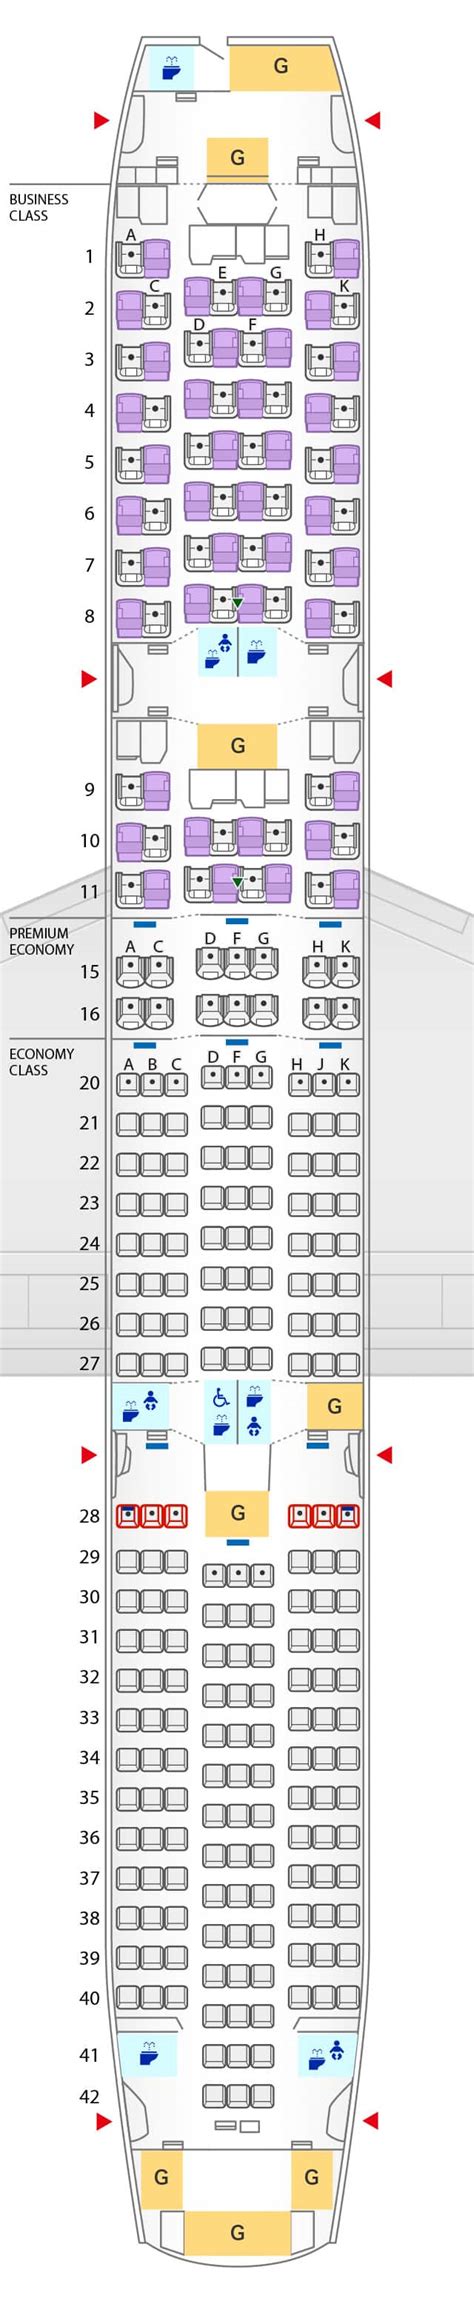 boeing 787-9 seat map